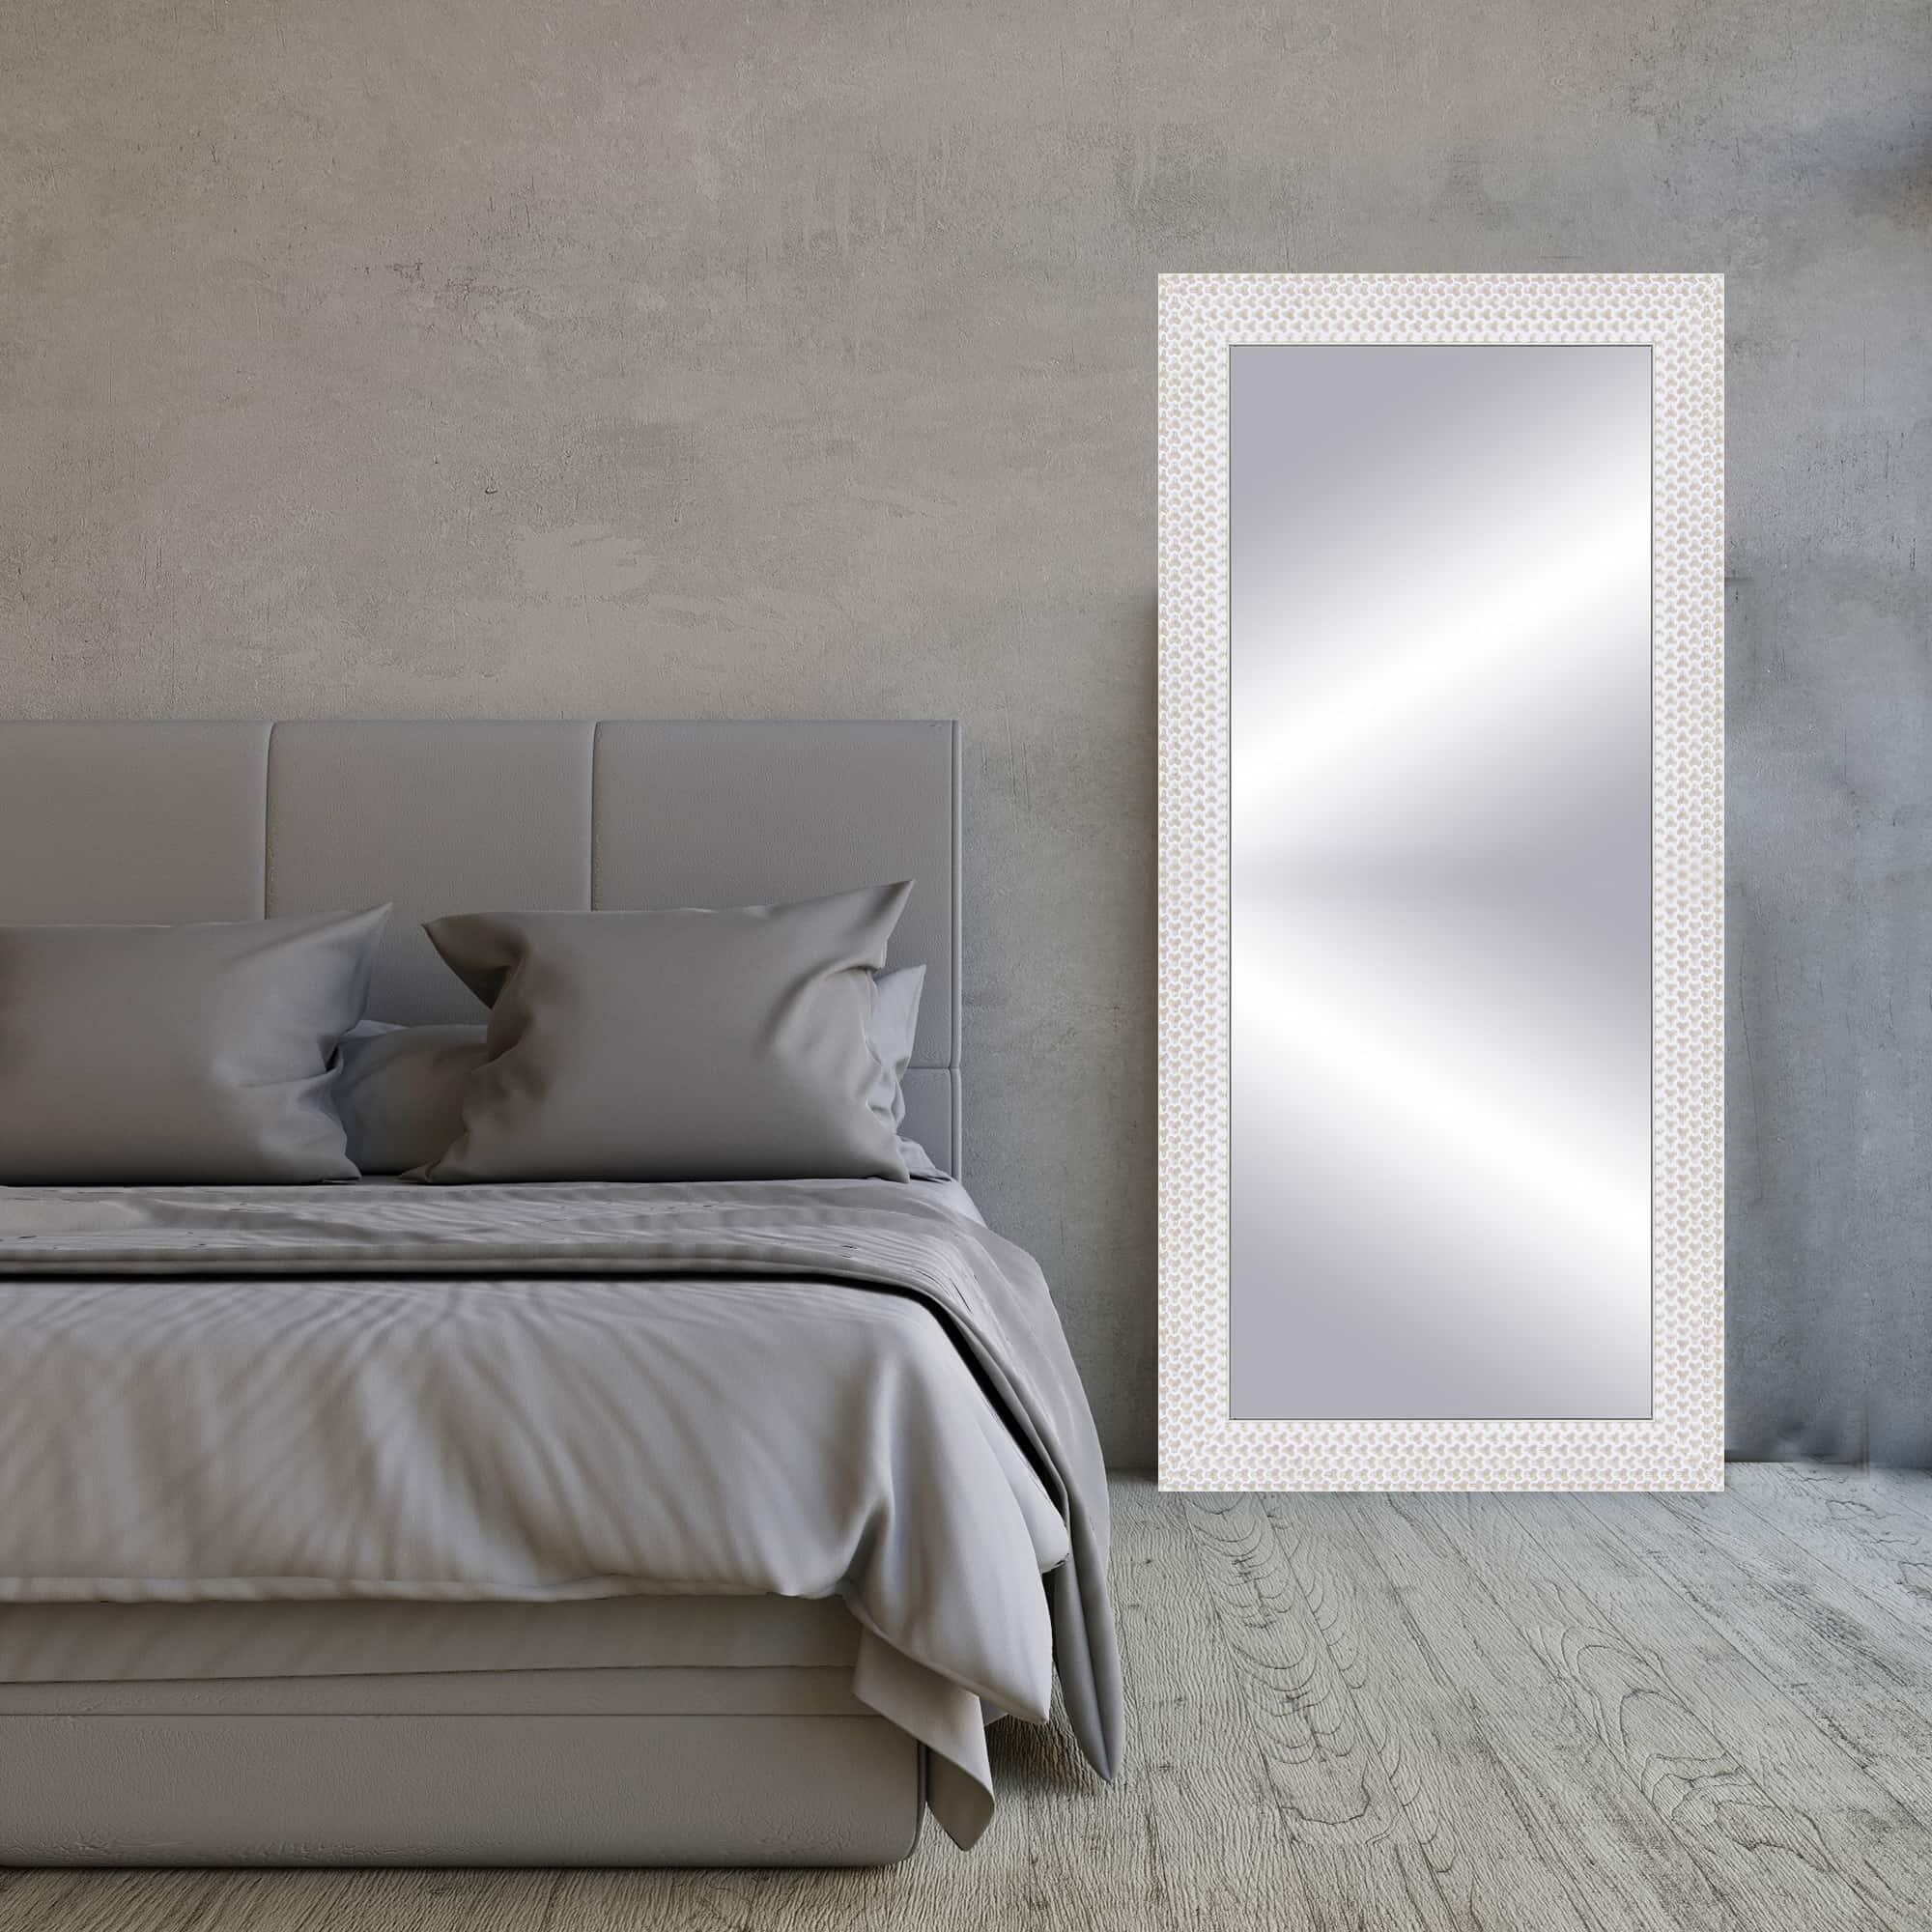 Espejo enmarcado rectangular ep 225 blanco 190 x 90 cm